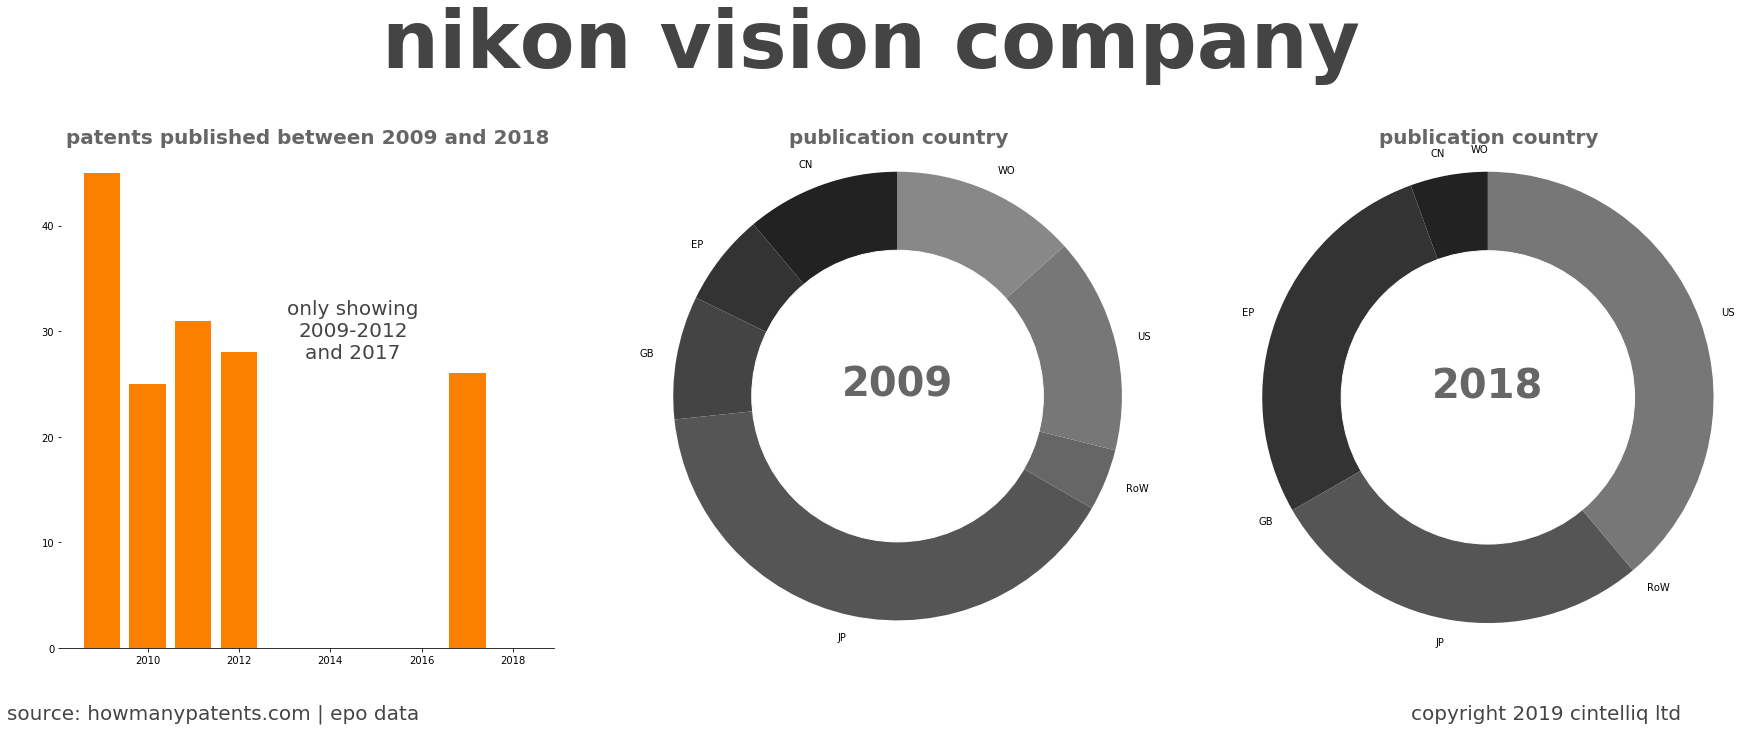 summary of patents for Nikon Vision Company